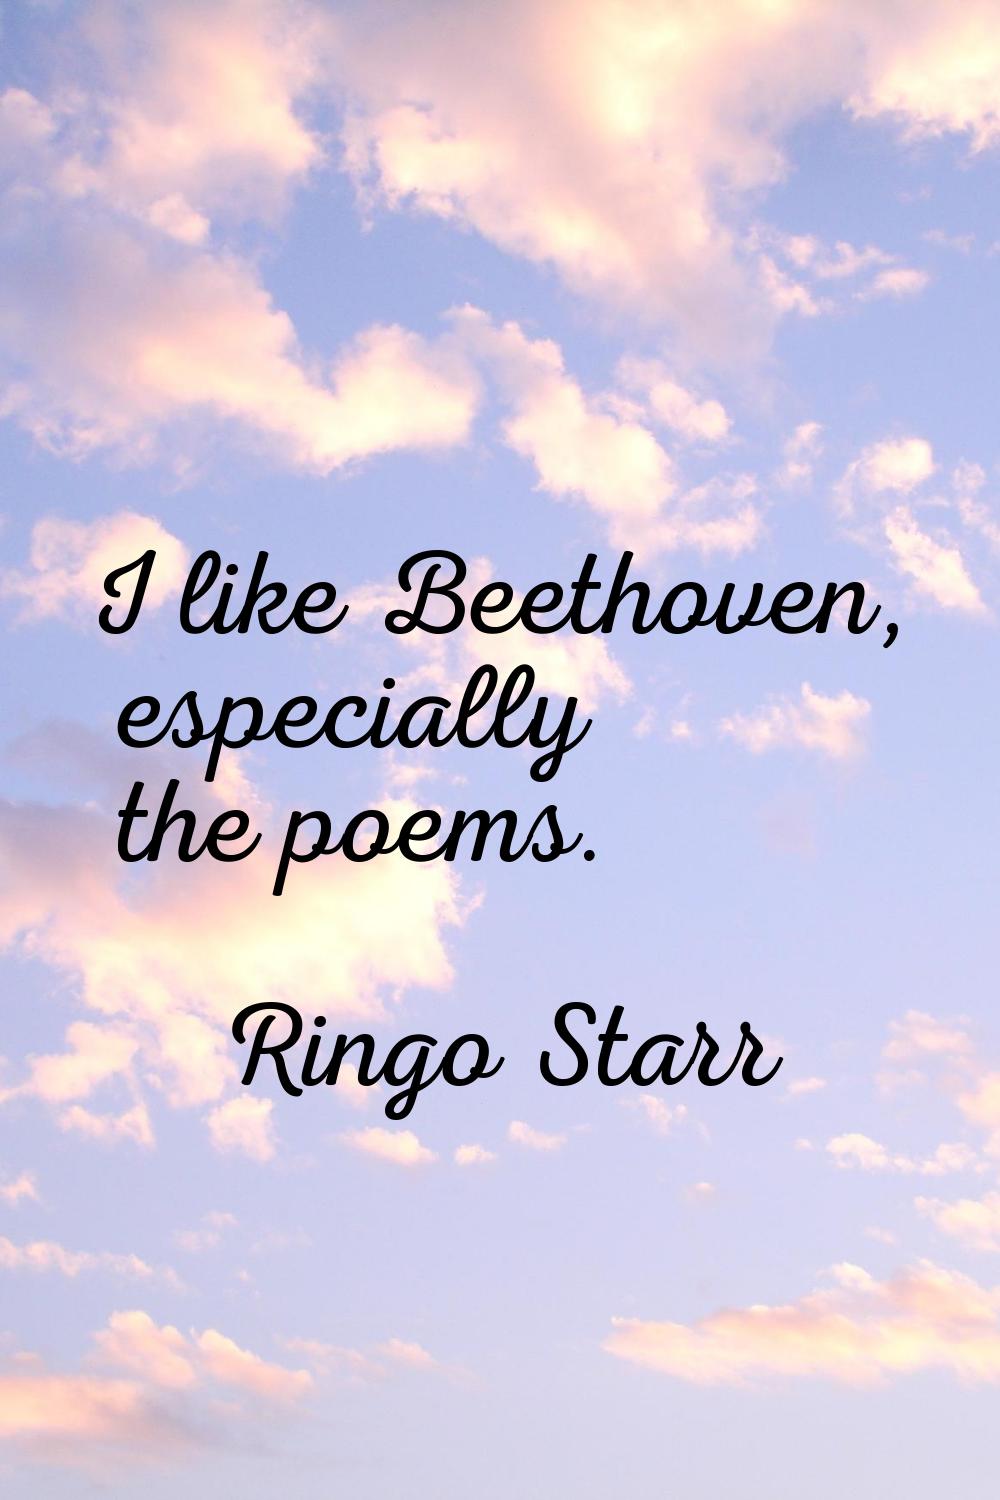 I like Beethoven, especially the poems.